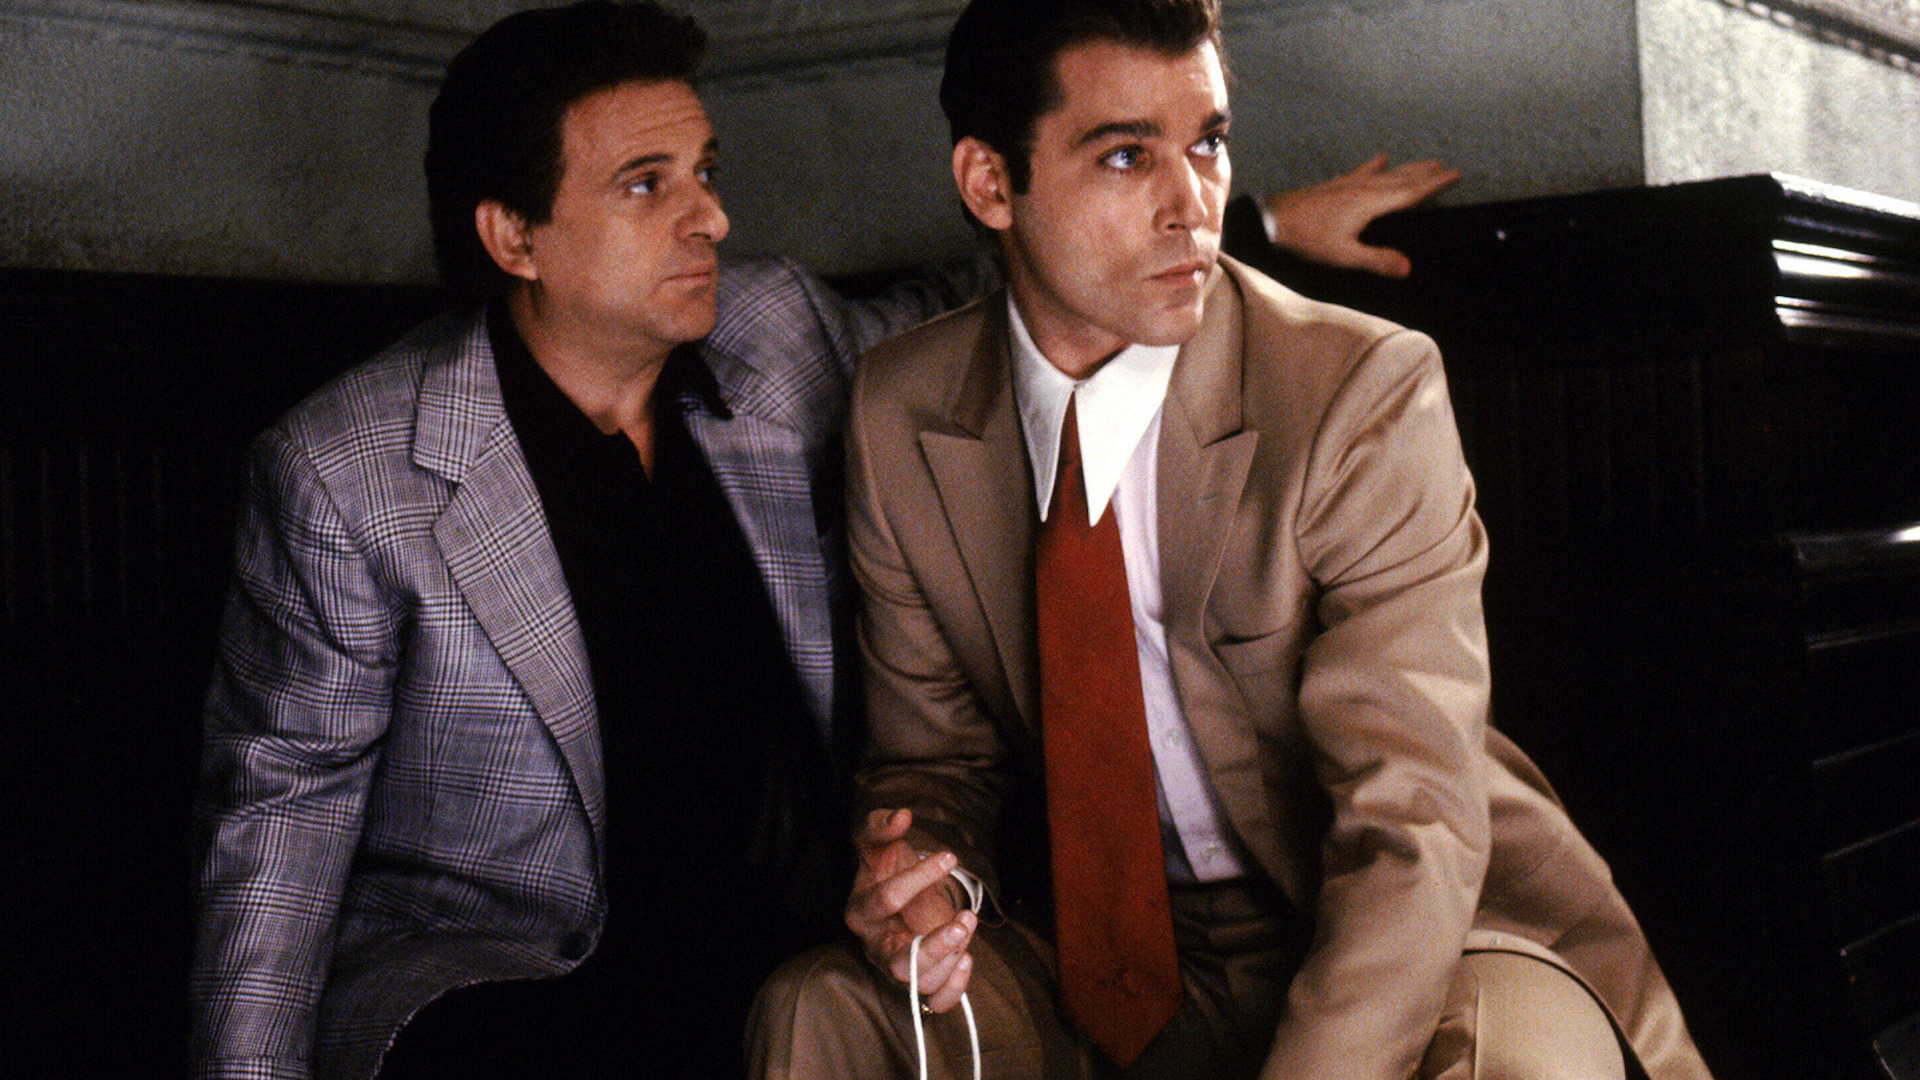 Joe Pesci, Ray Liotta, and Robert De Niro star in Goodfellas, directed by Martin Scorsese.